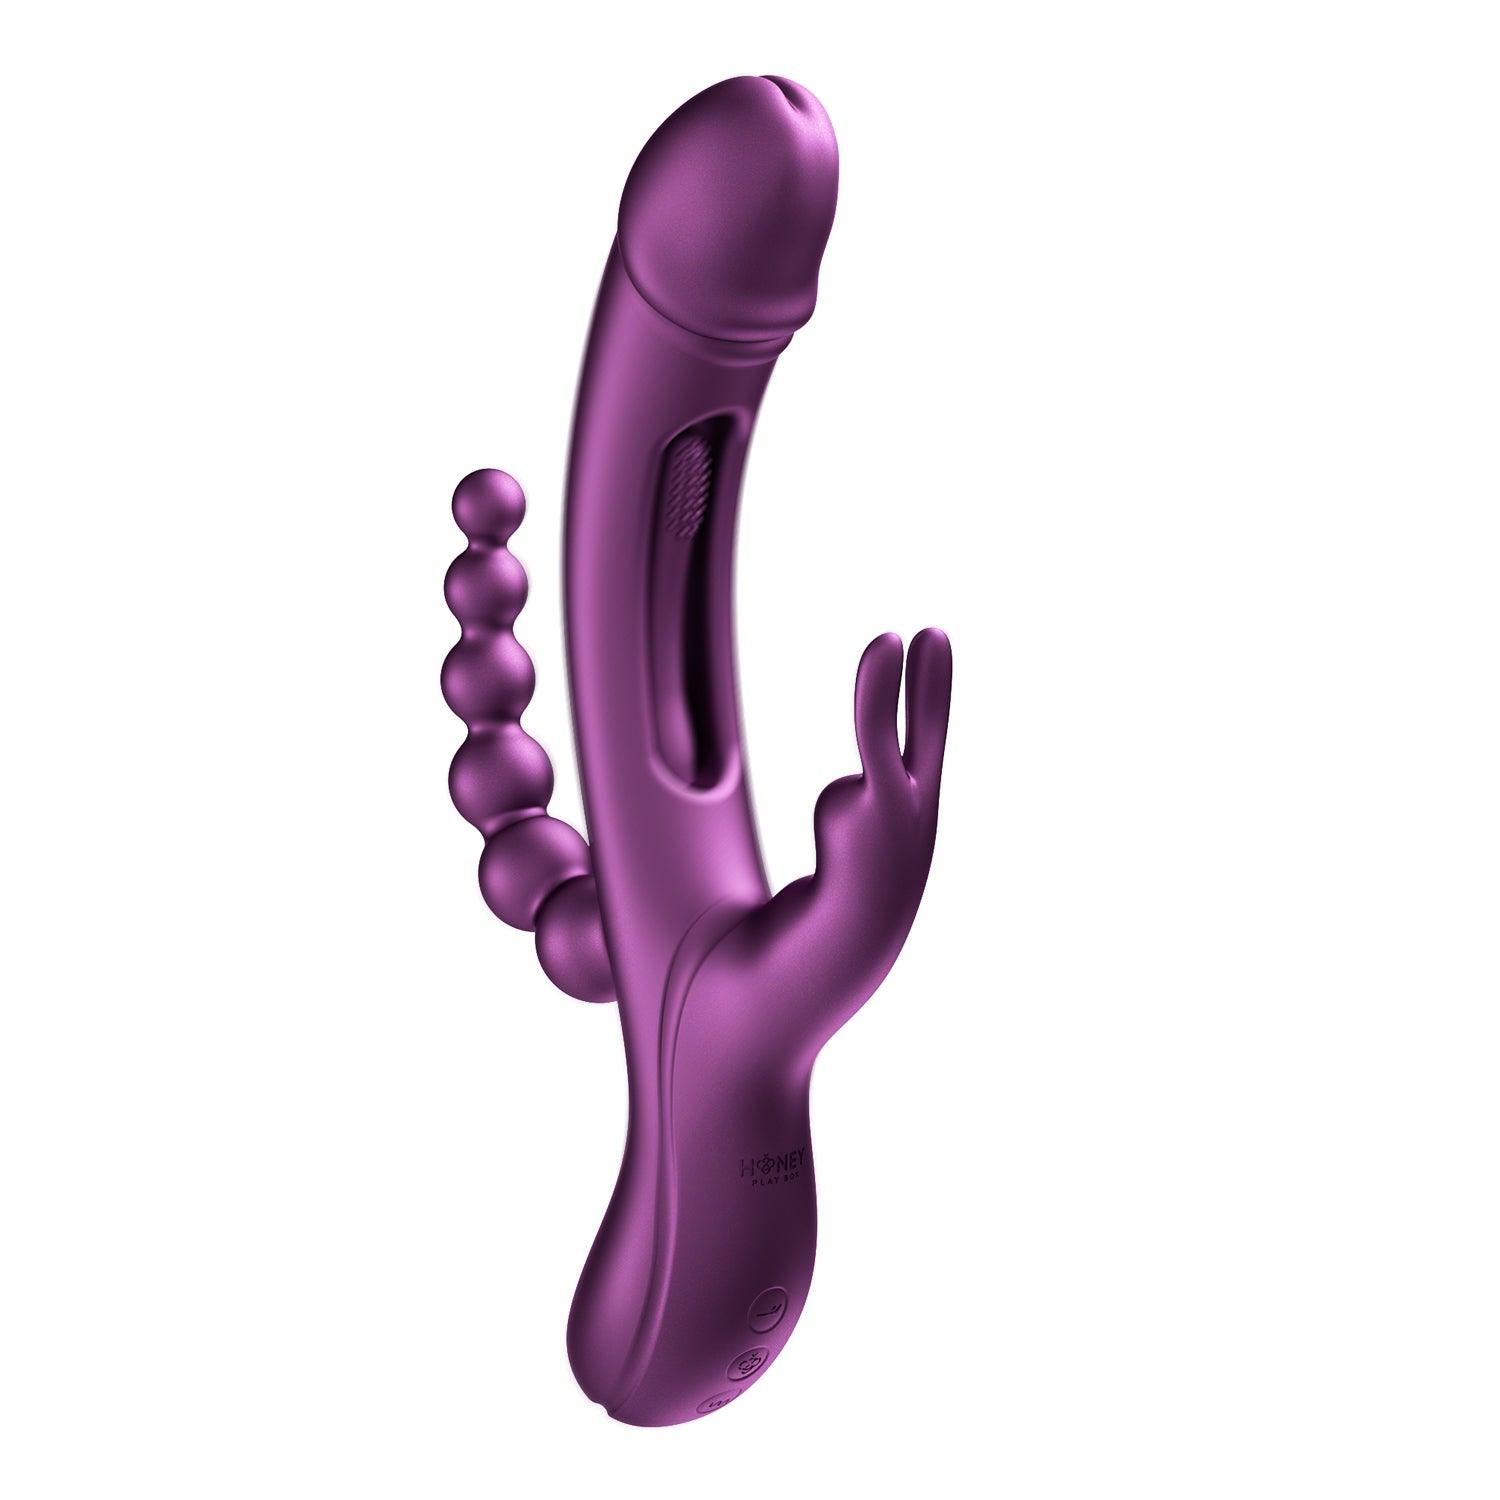 Trilux - App Controlled Rabbit Vibrator - Purple - My Sex Toy Hub